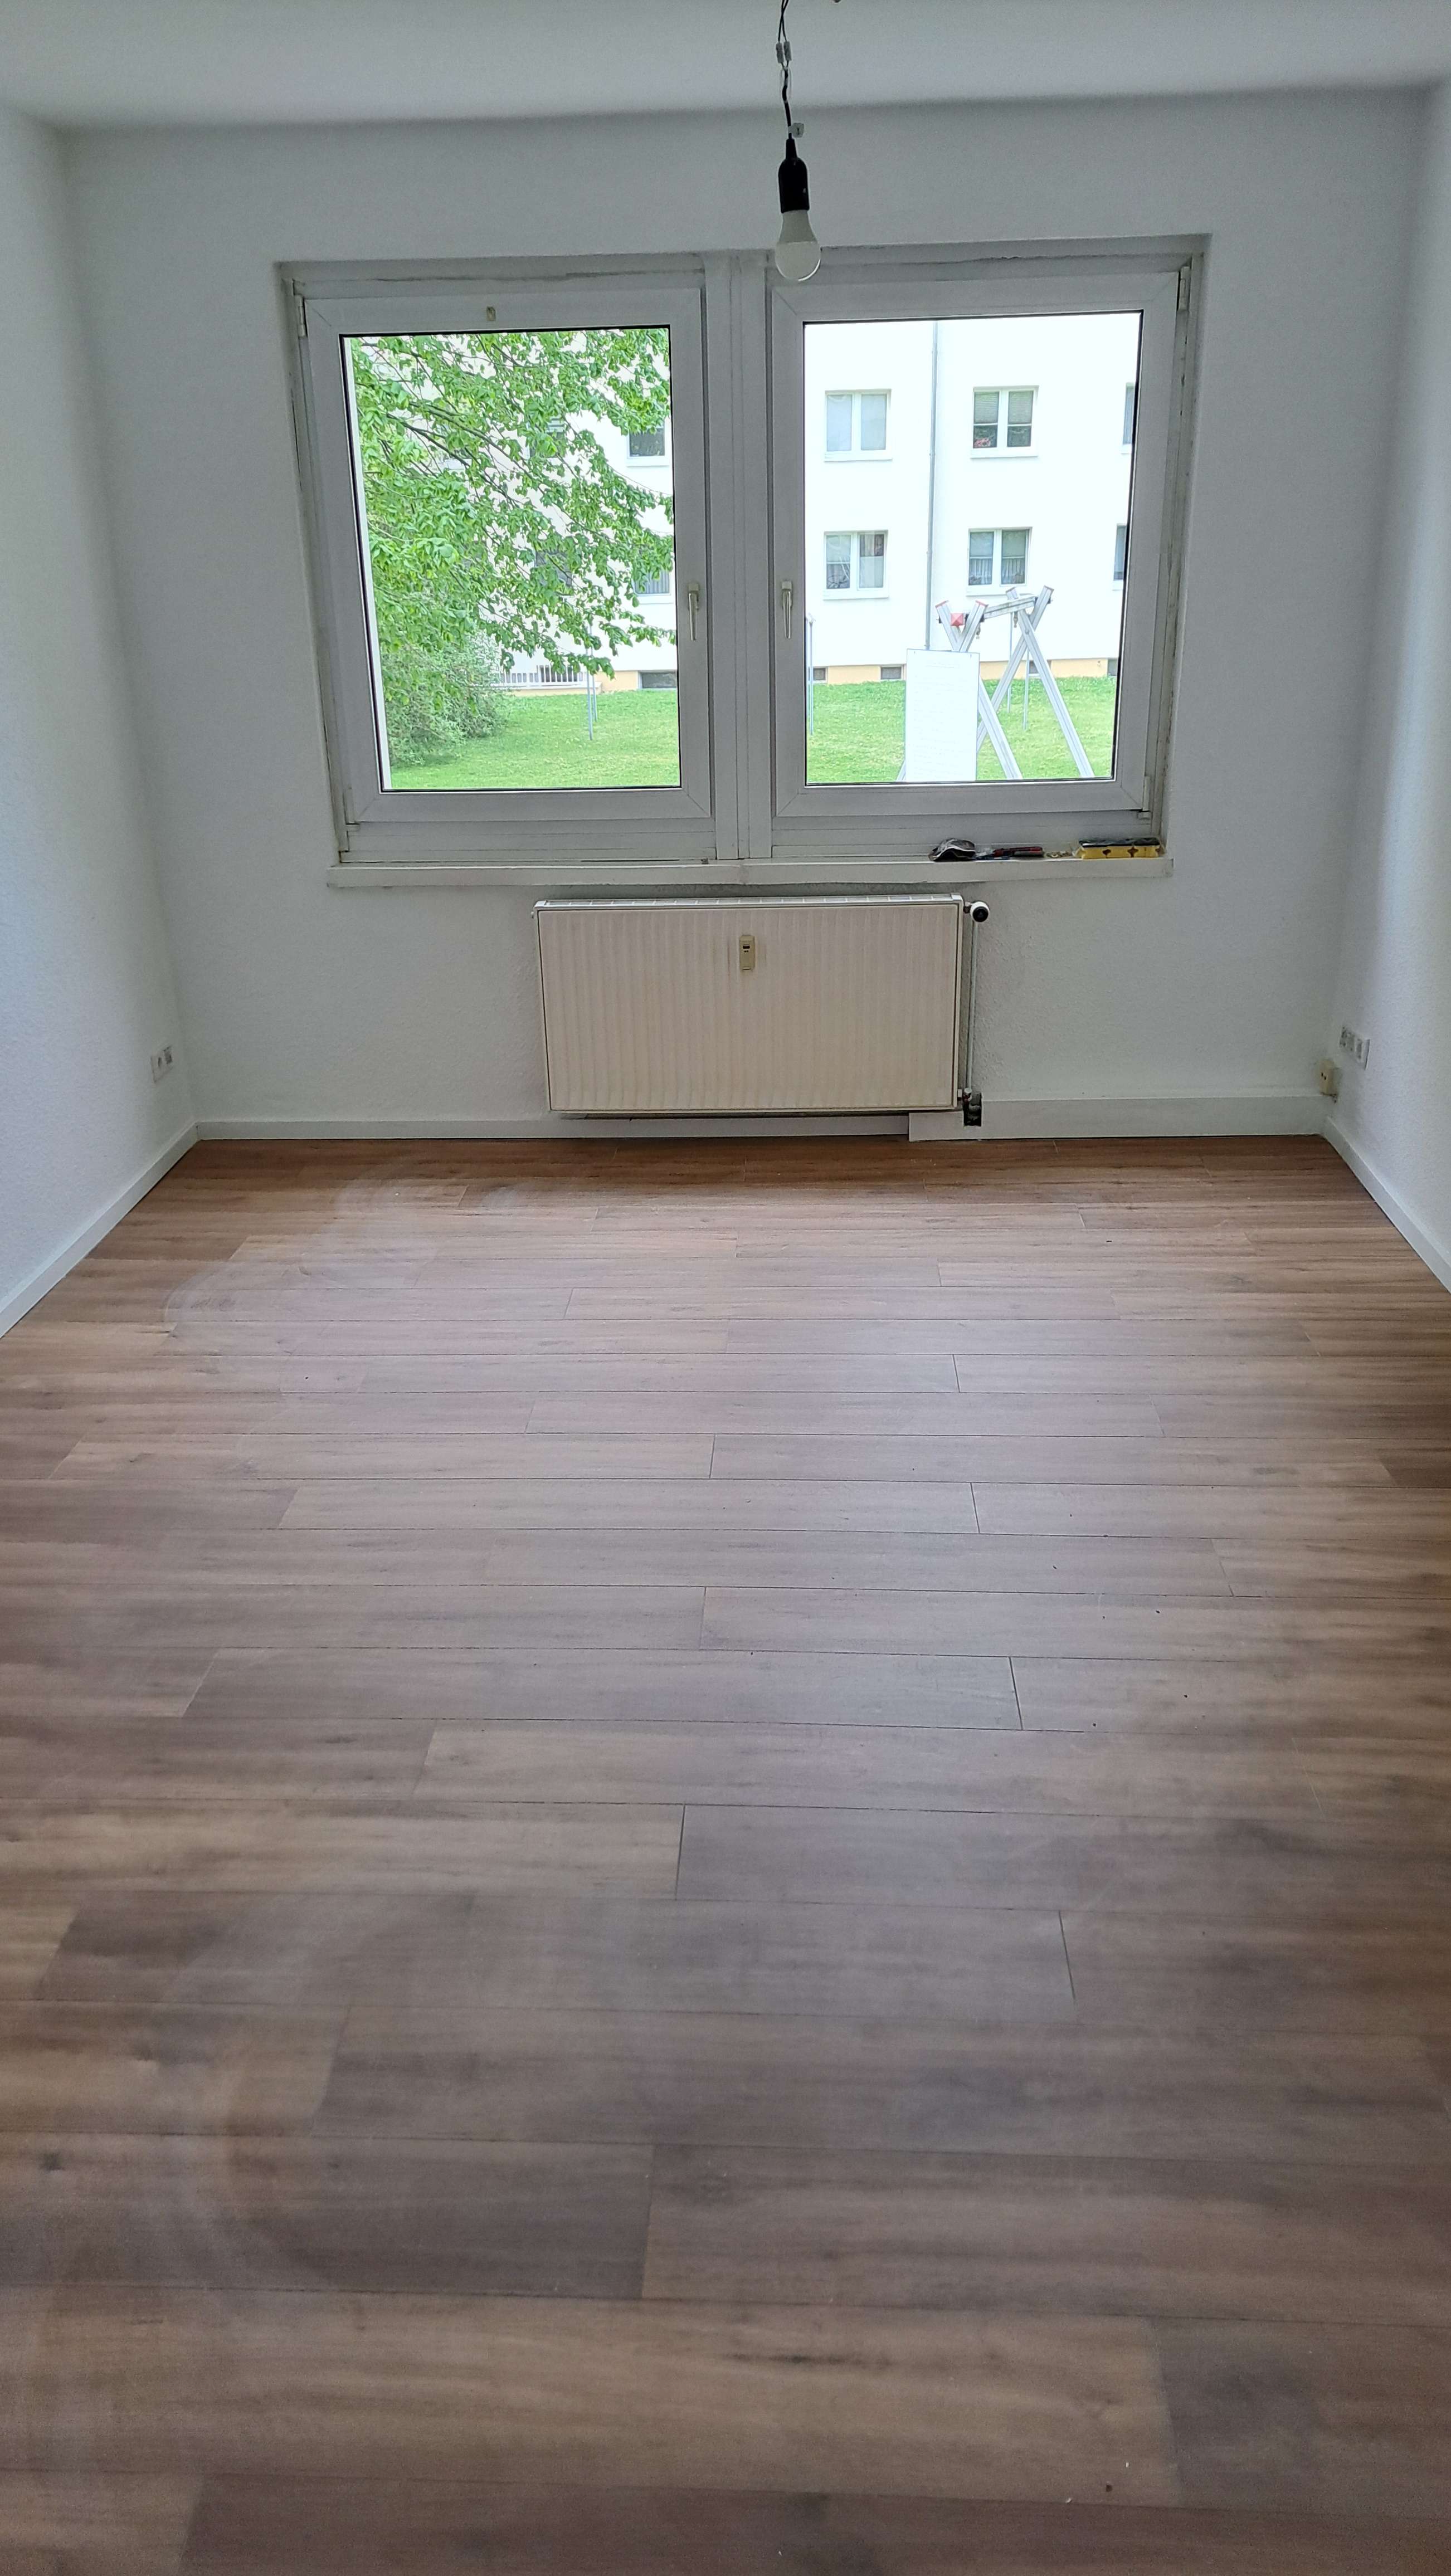 Wohnung zum Mieten in Neukieritzsch 375,00 € 48 m²